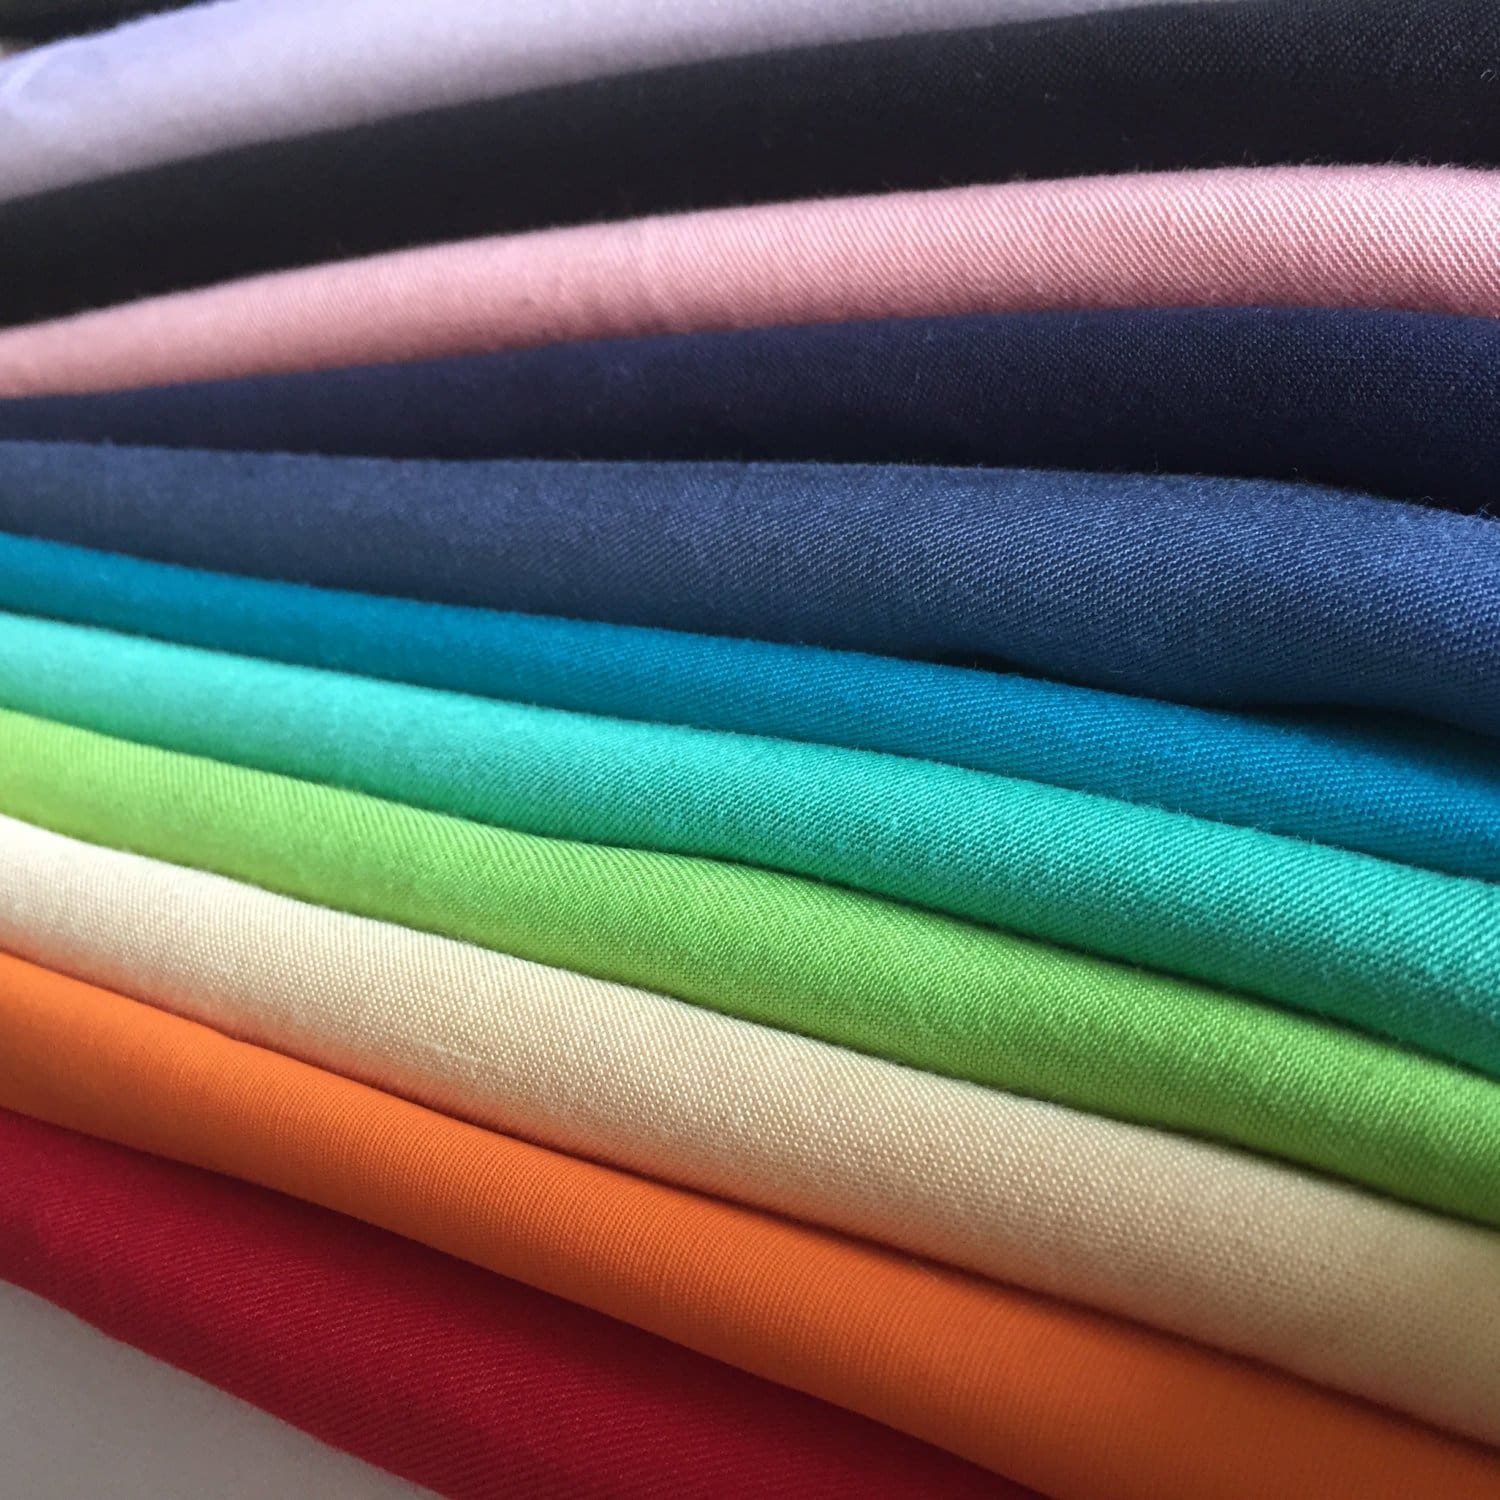 Wholesale Best Quality Tencel Linen Fabric - Tencel Fabric High